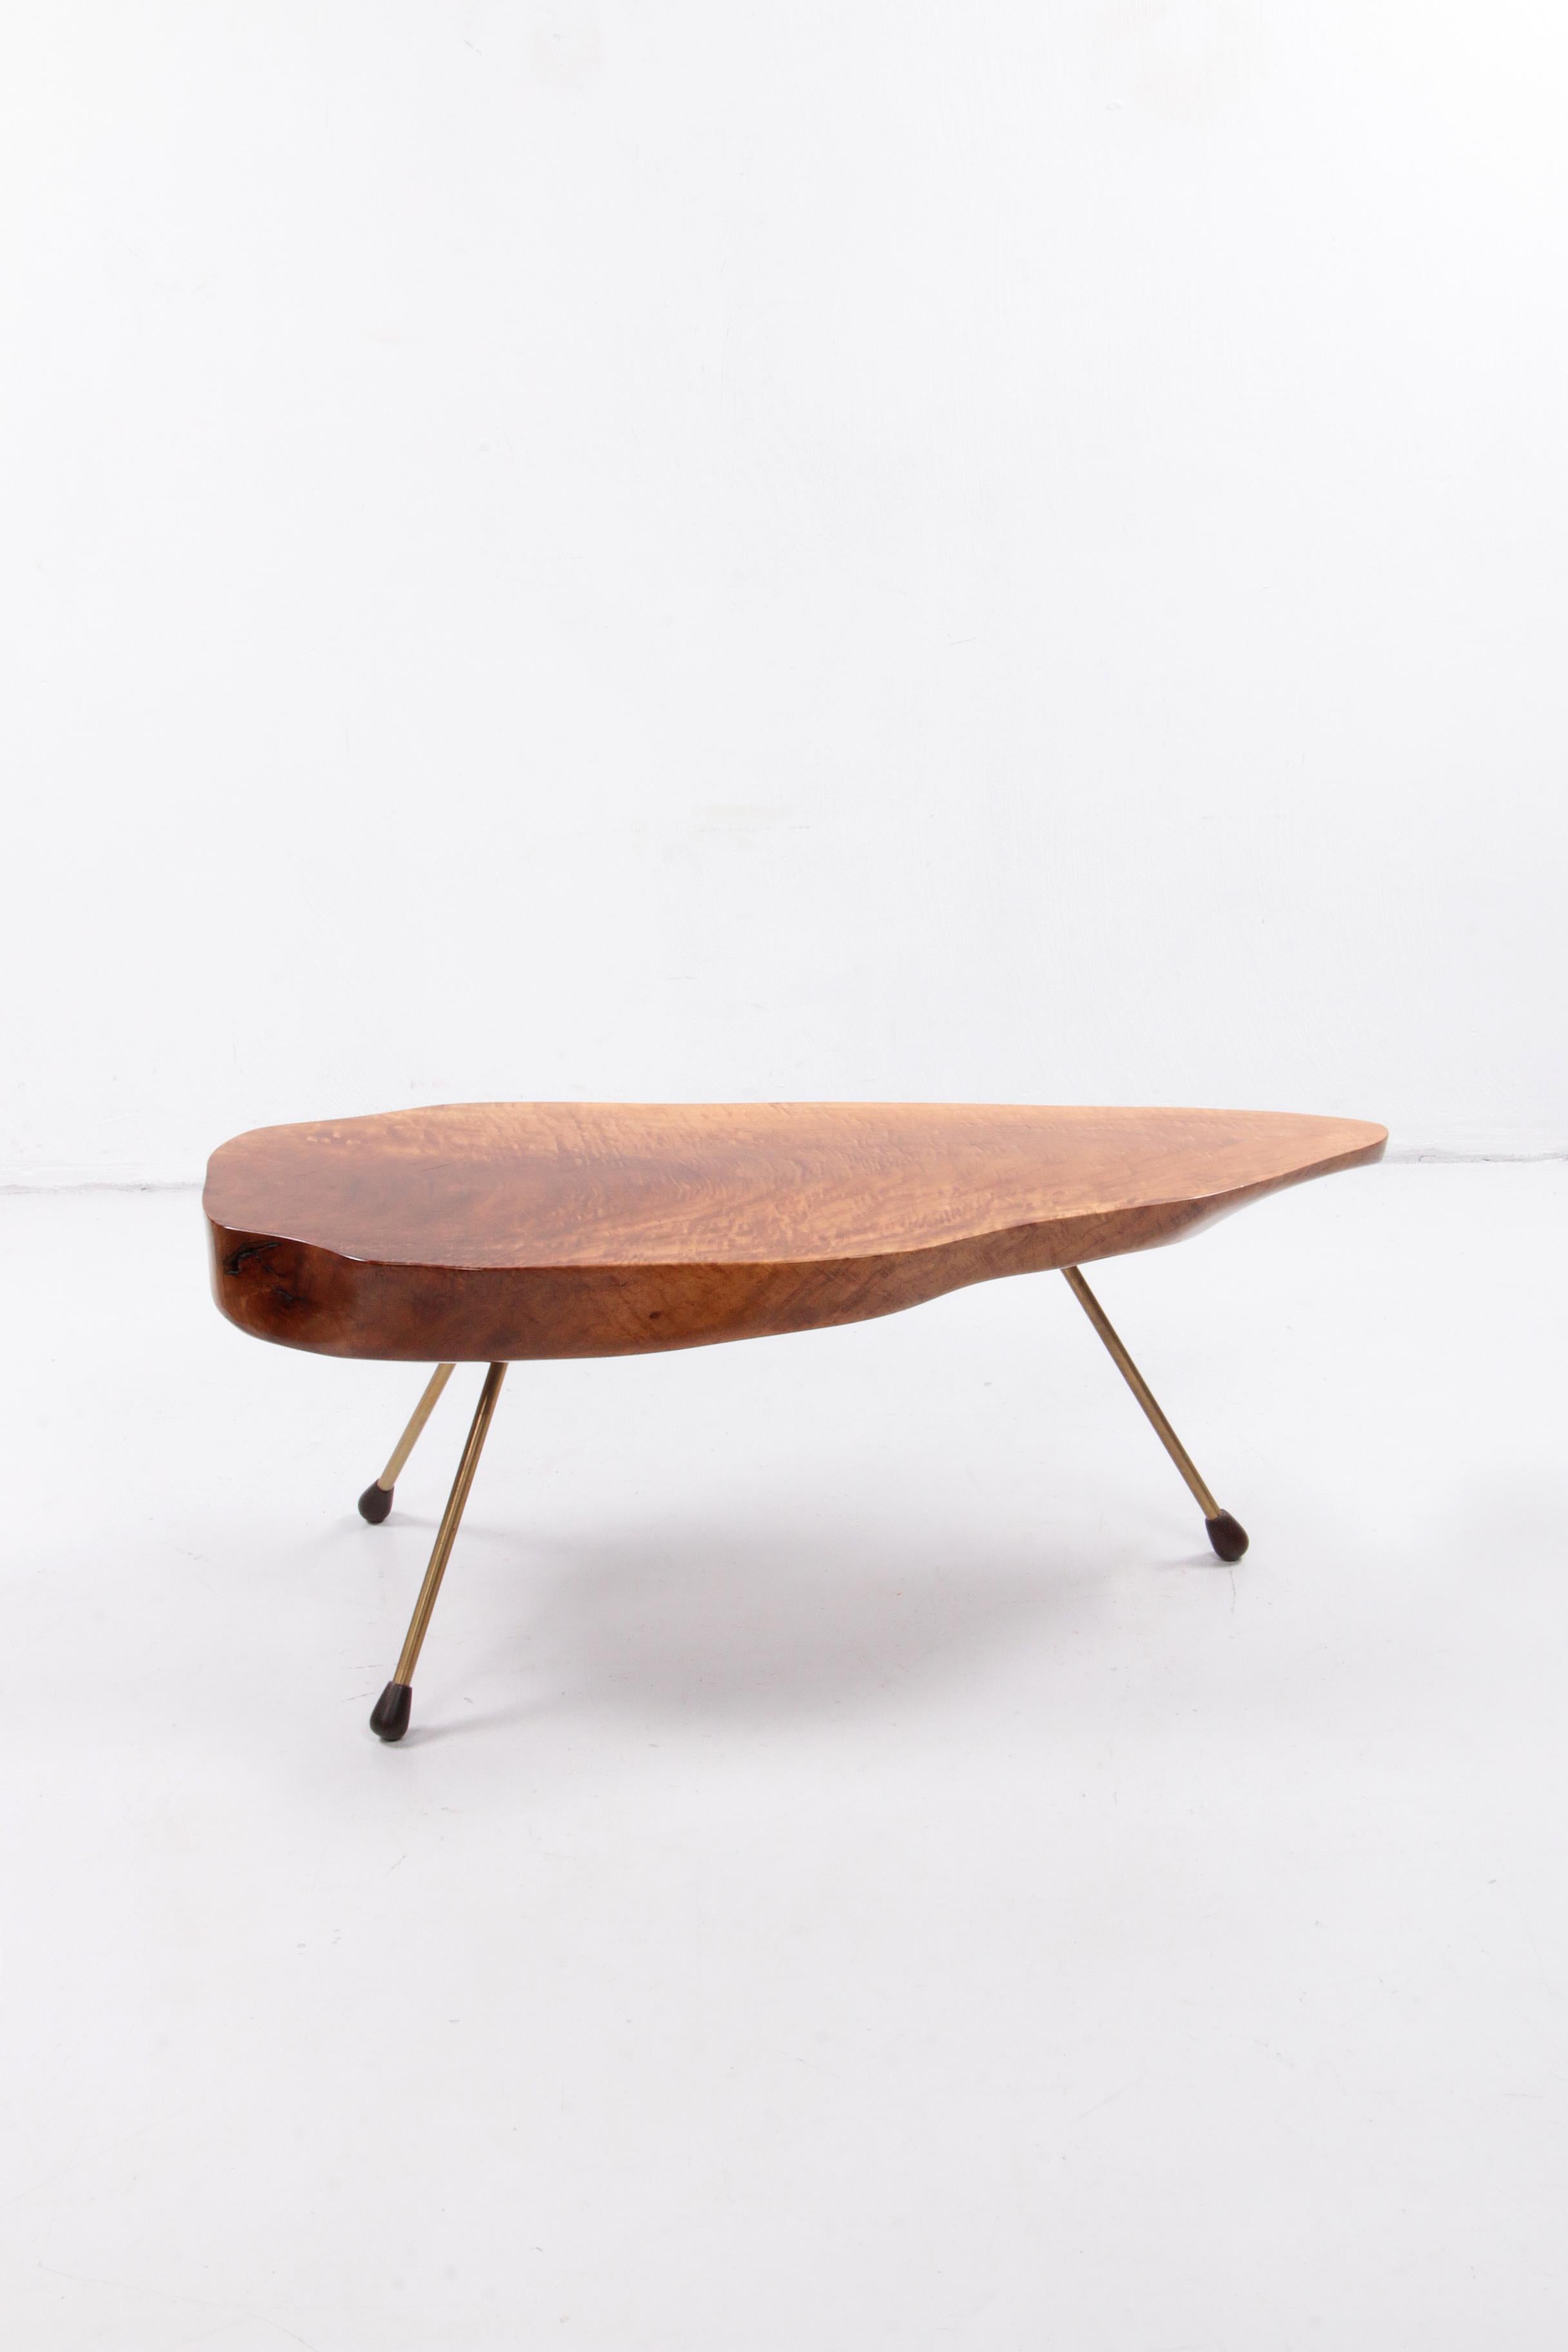 Carl Aubock Design Coffee Table Walnut with Copper Legs, 1950s Austria For Sale 8